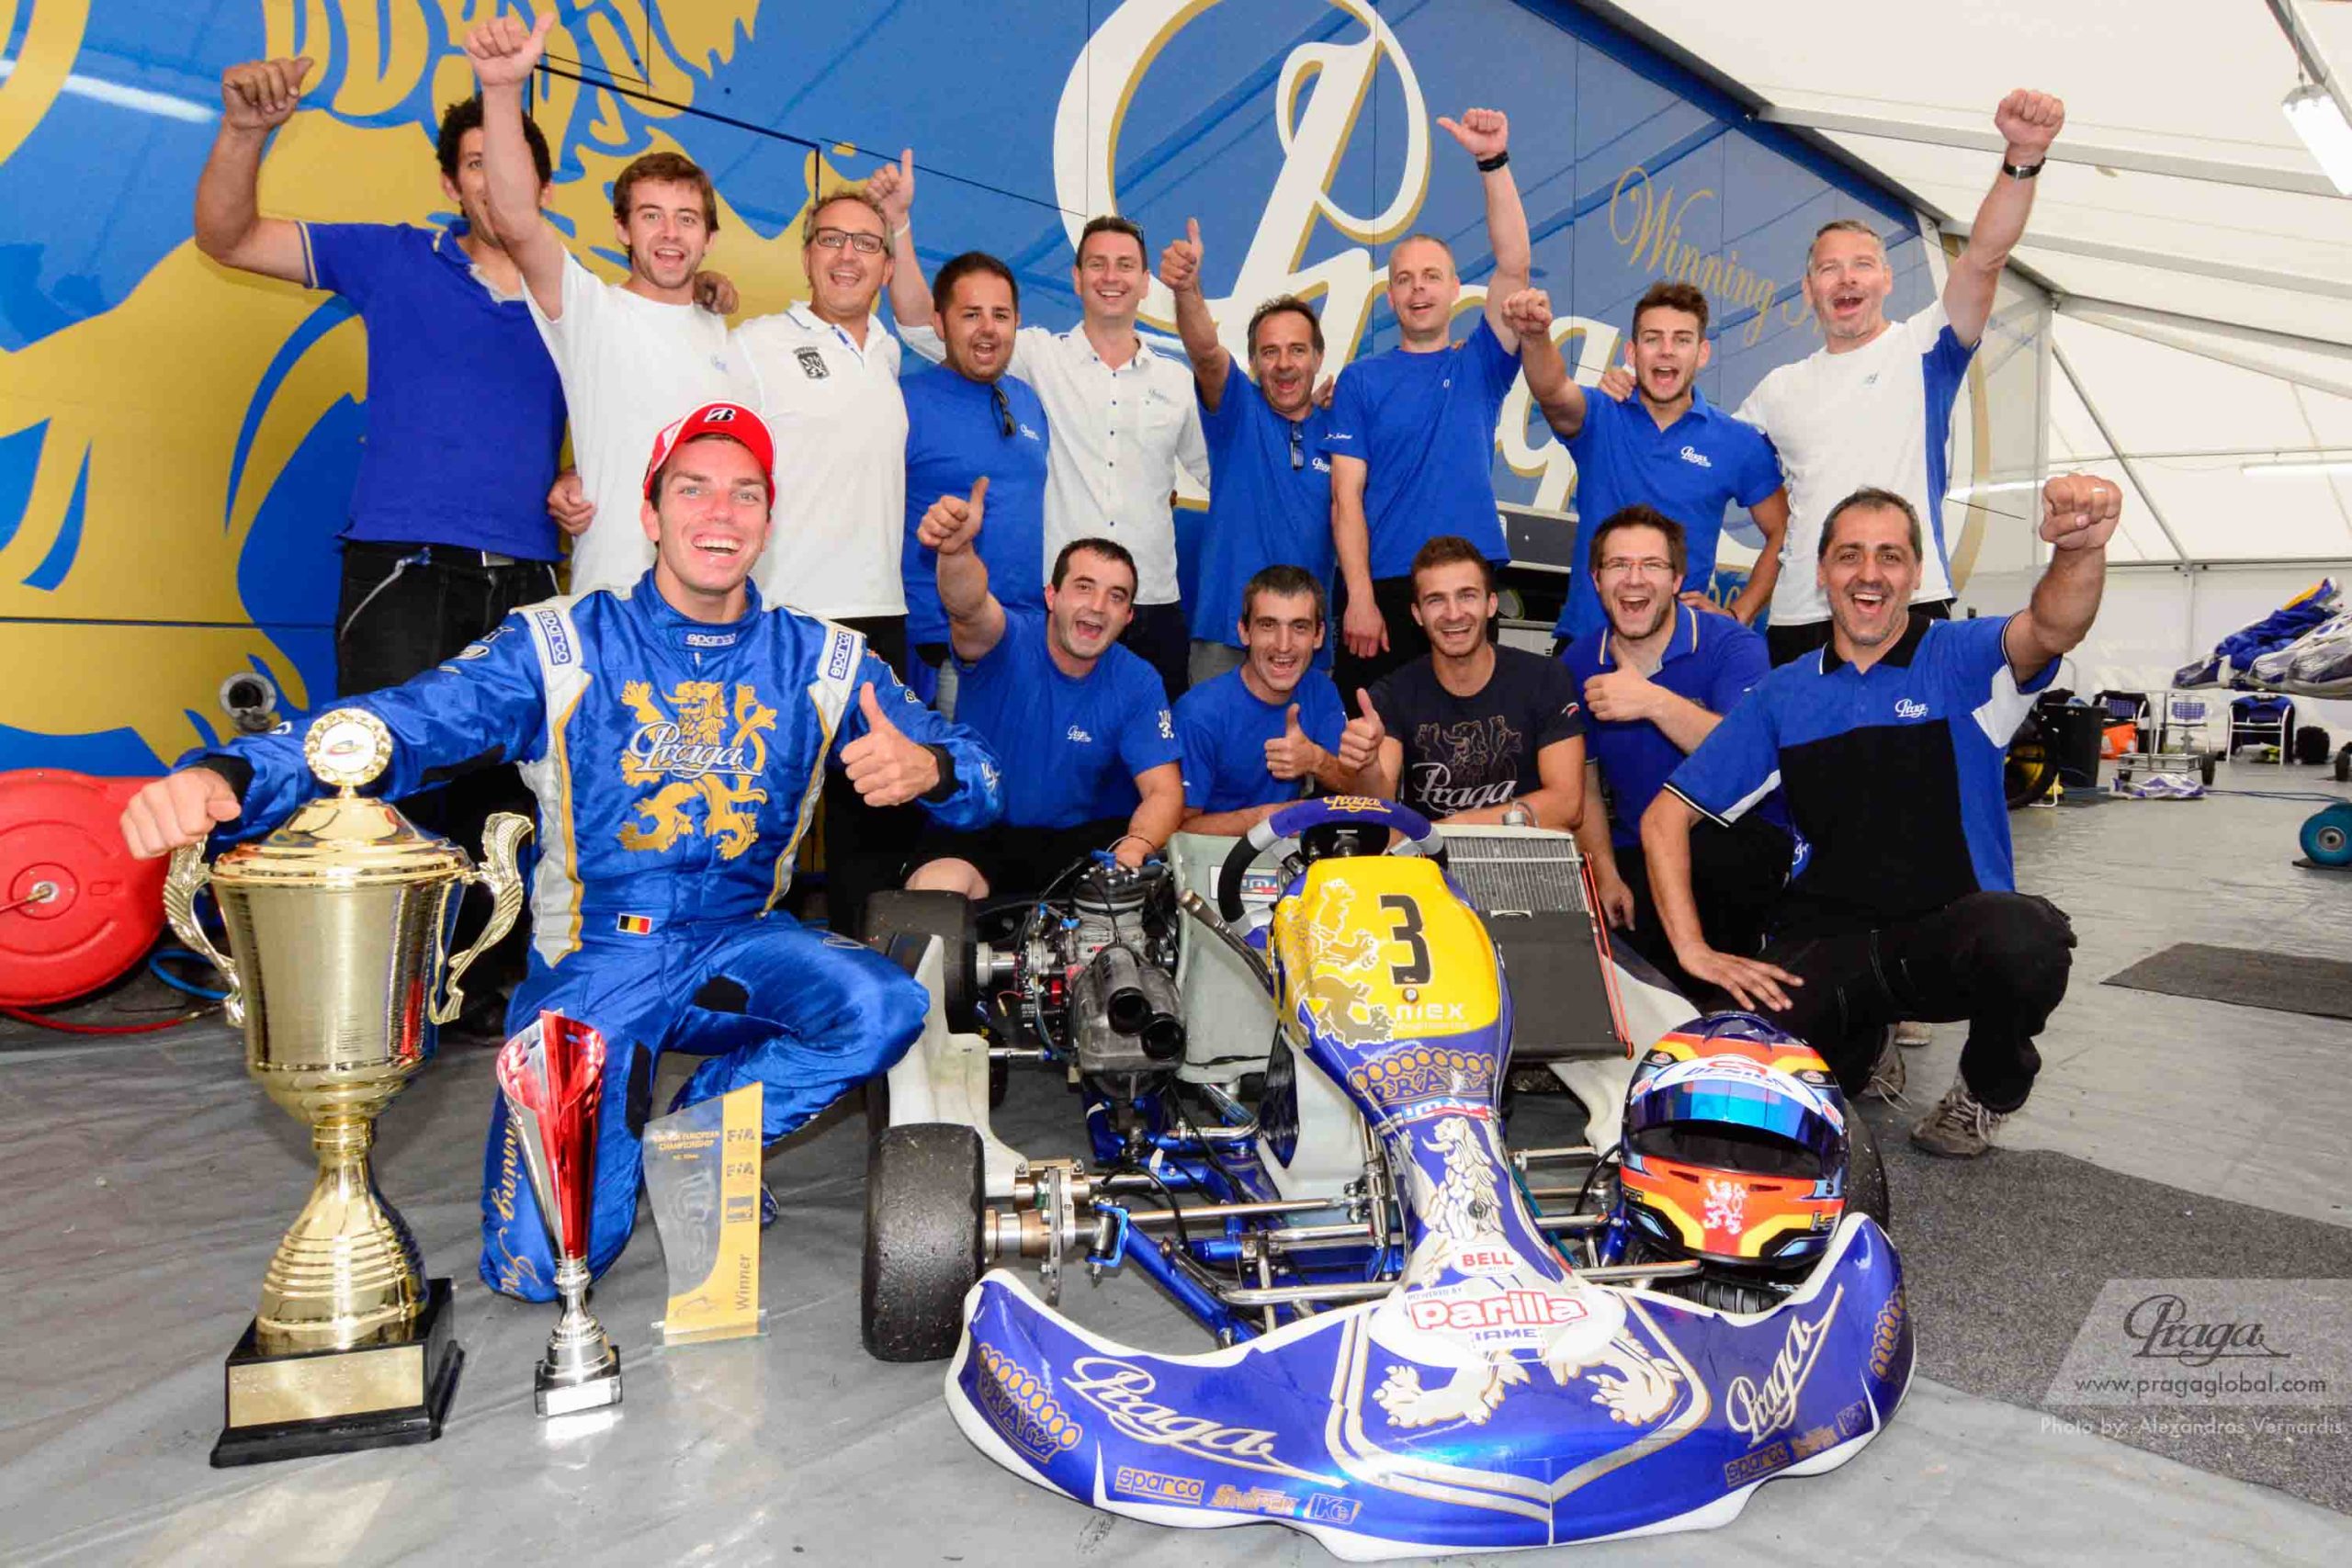 European victory for Praga Kart Racing